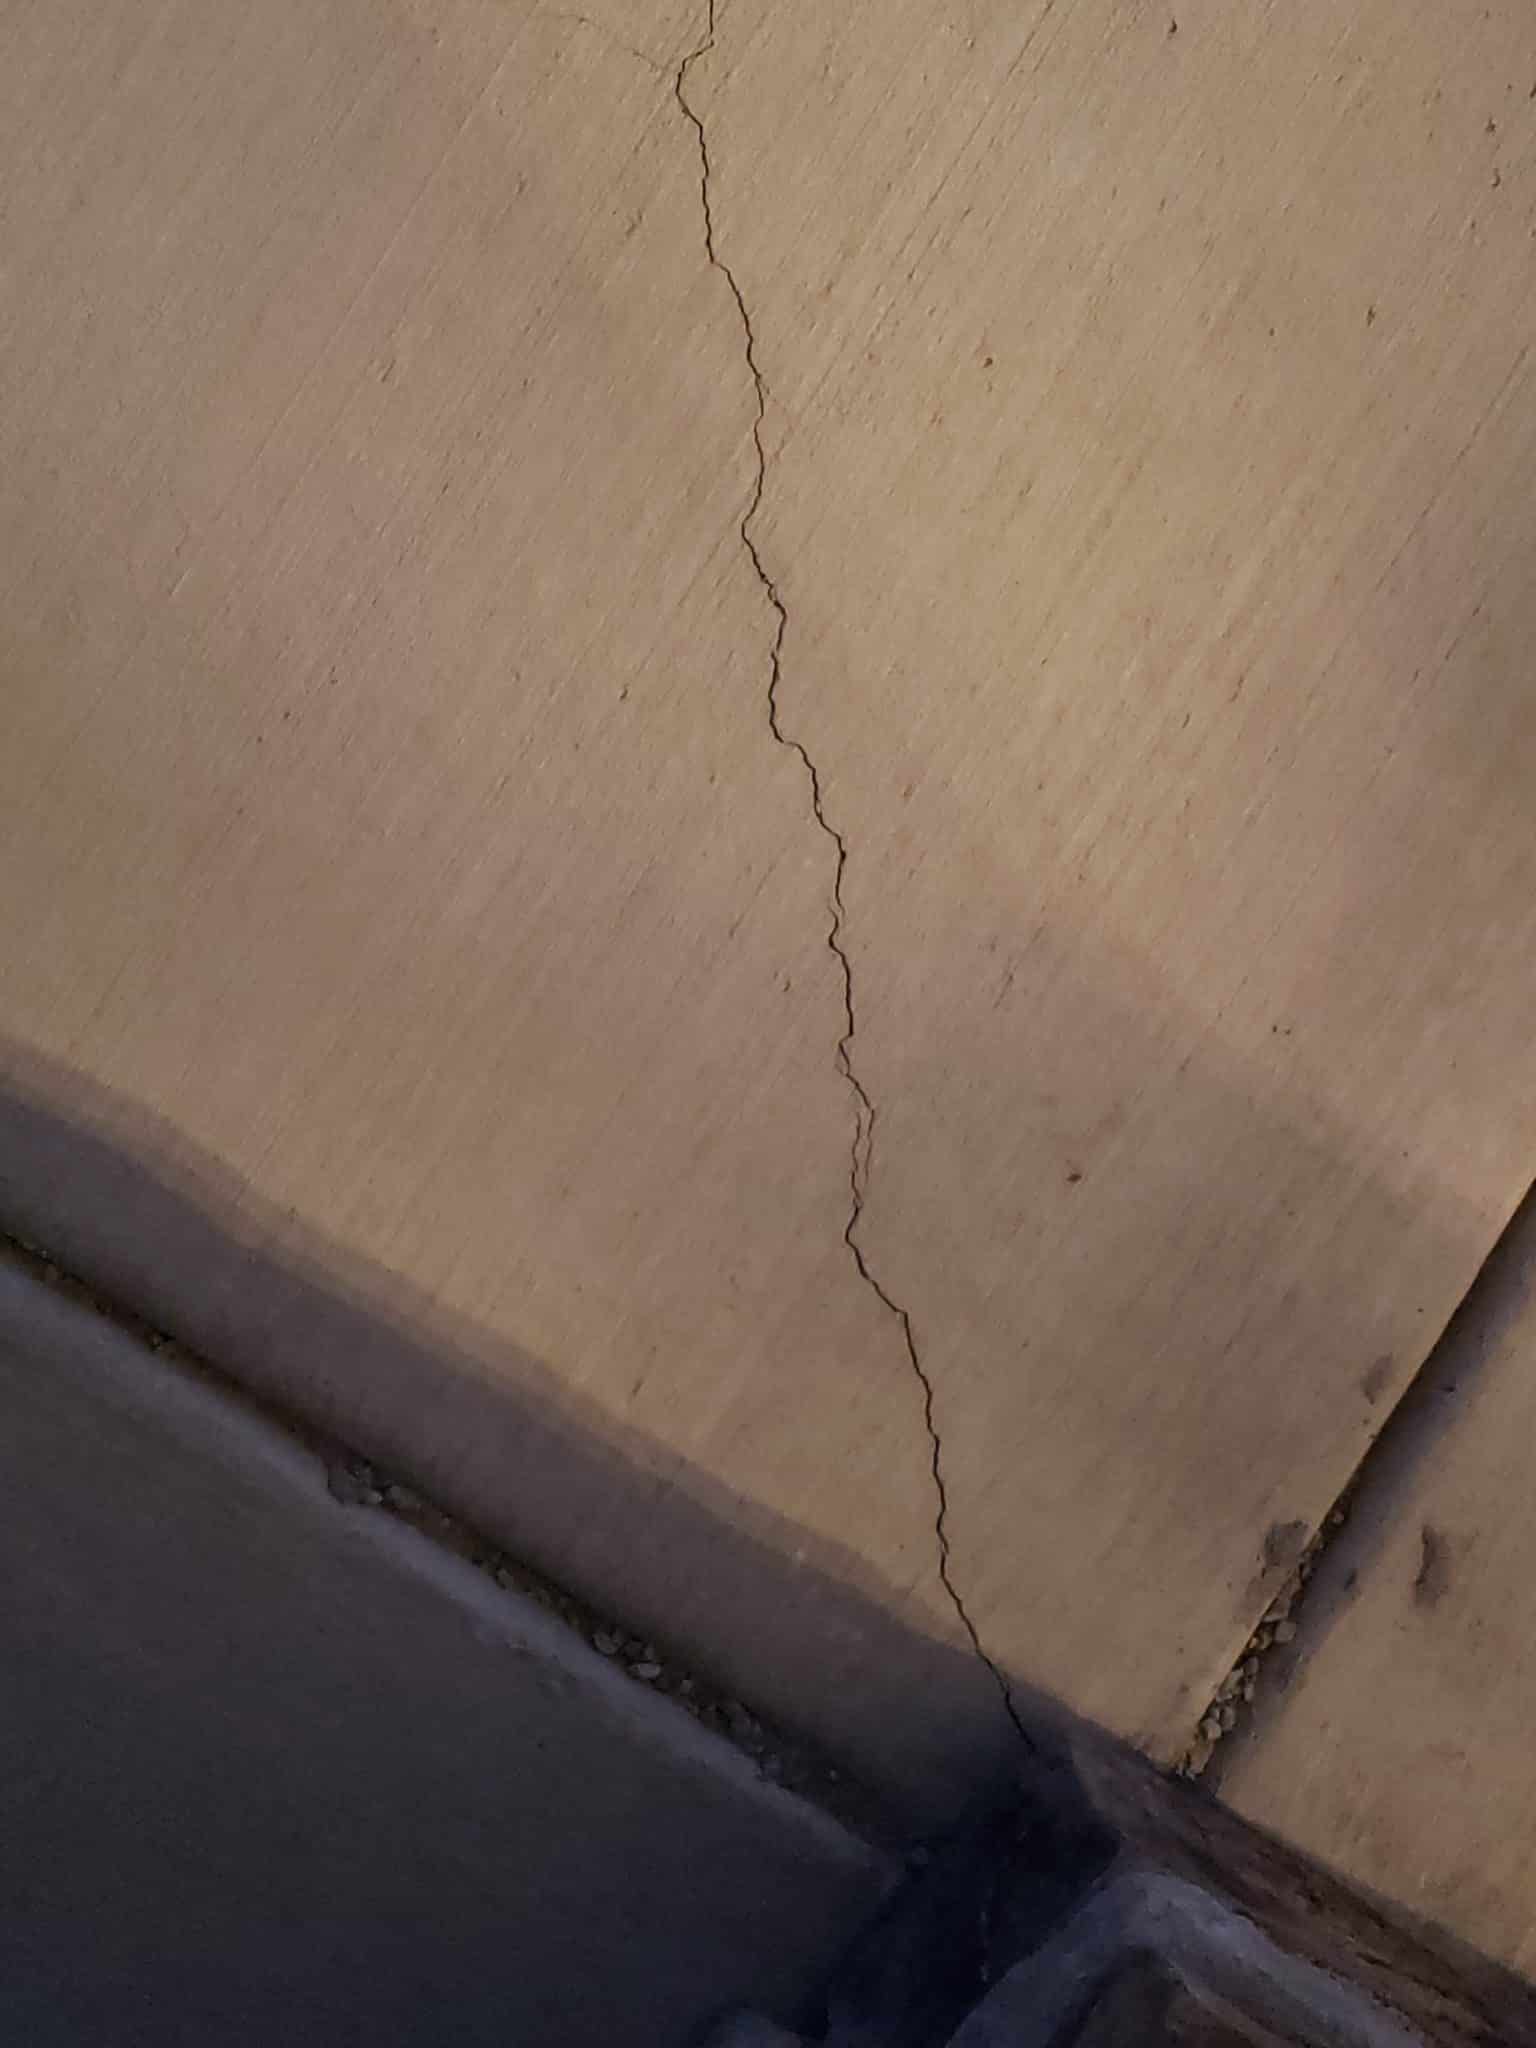 Shinkage cracks concete slab